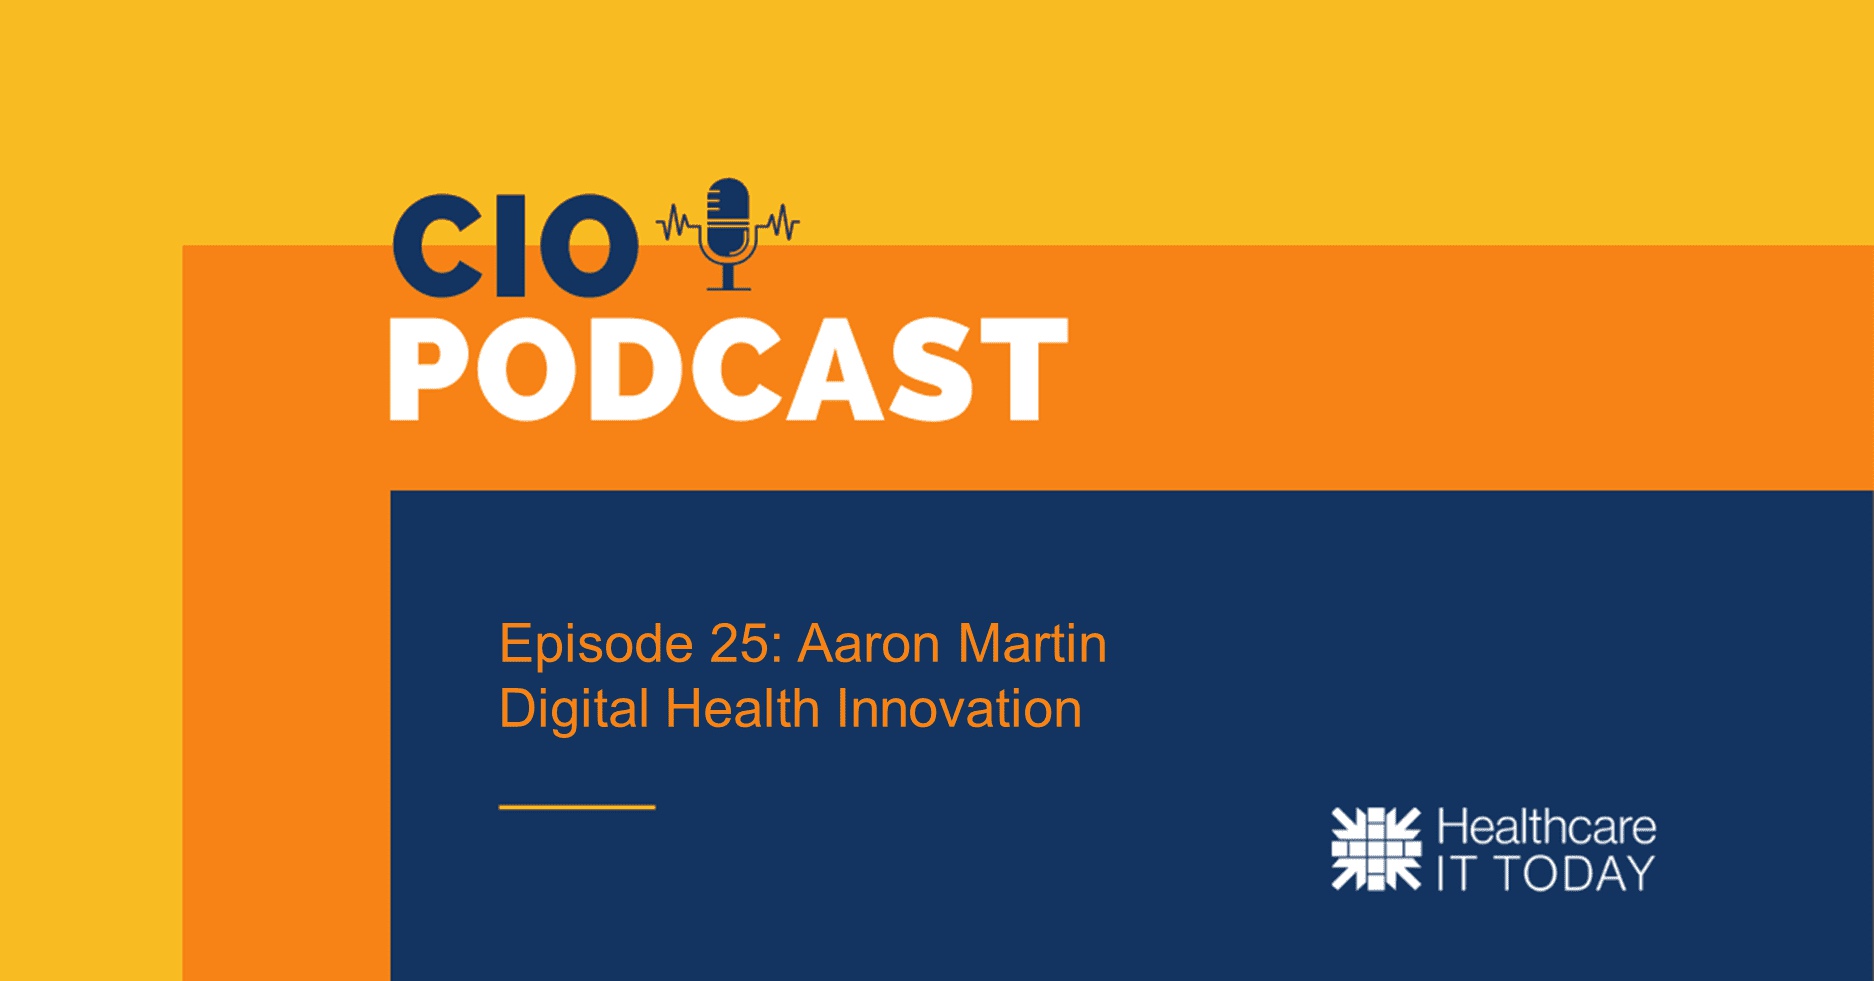 CIO Podcast – Episode 25: Aaron Martin on Digital Health Innovation